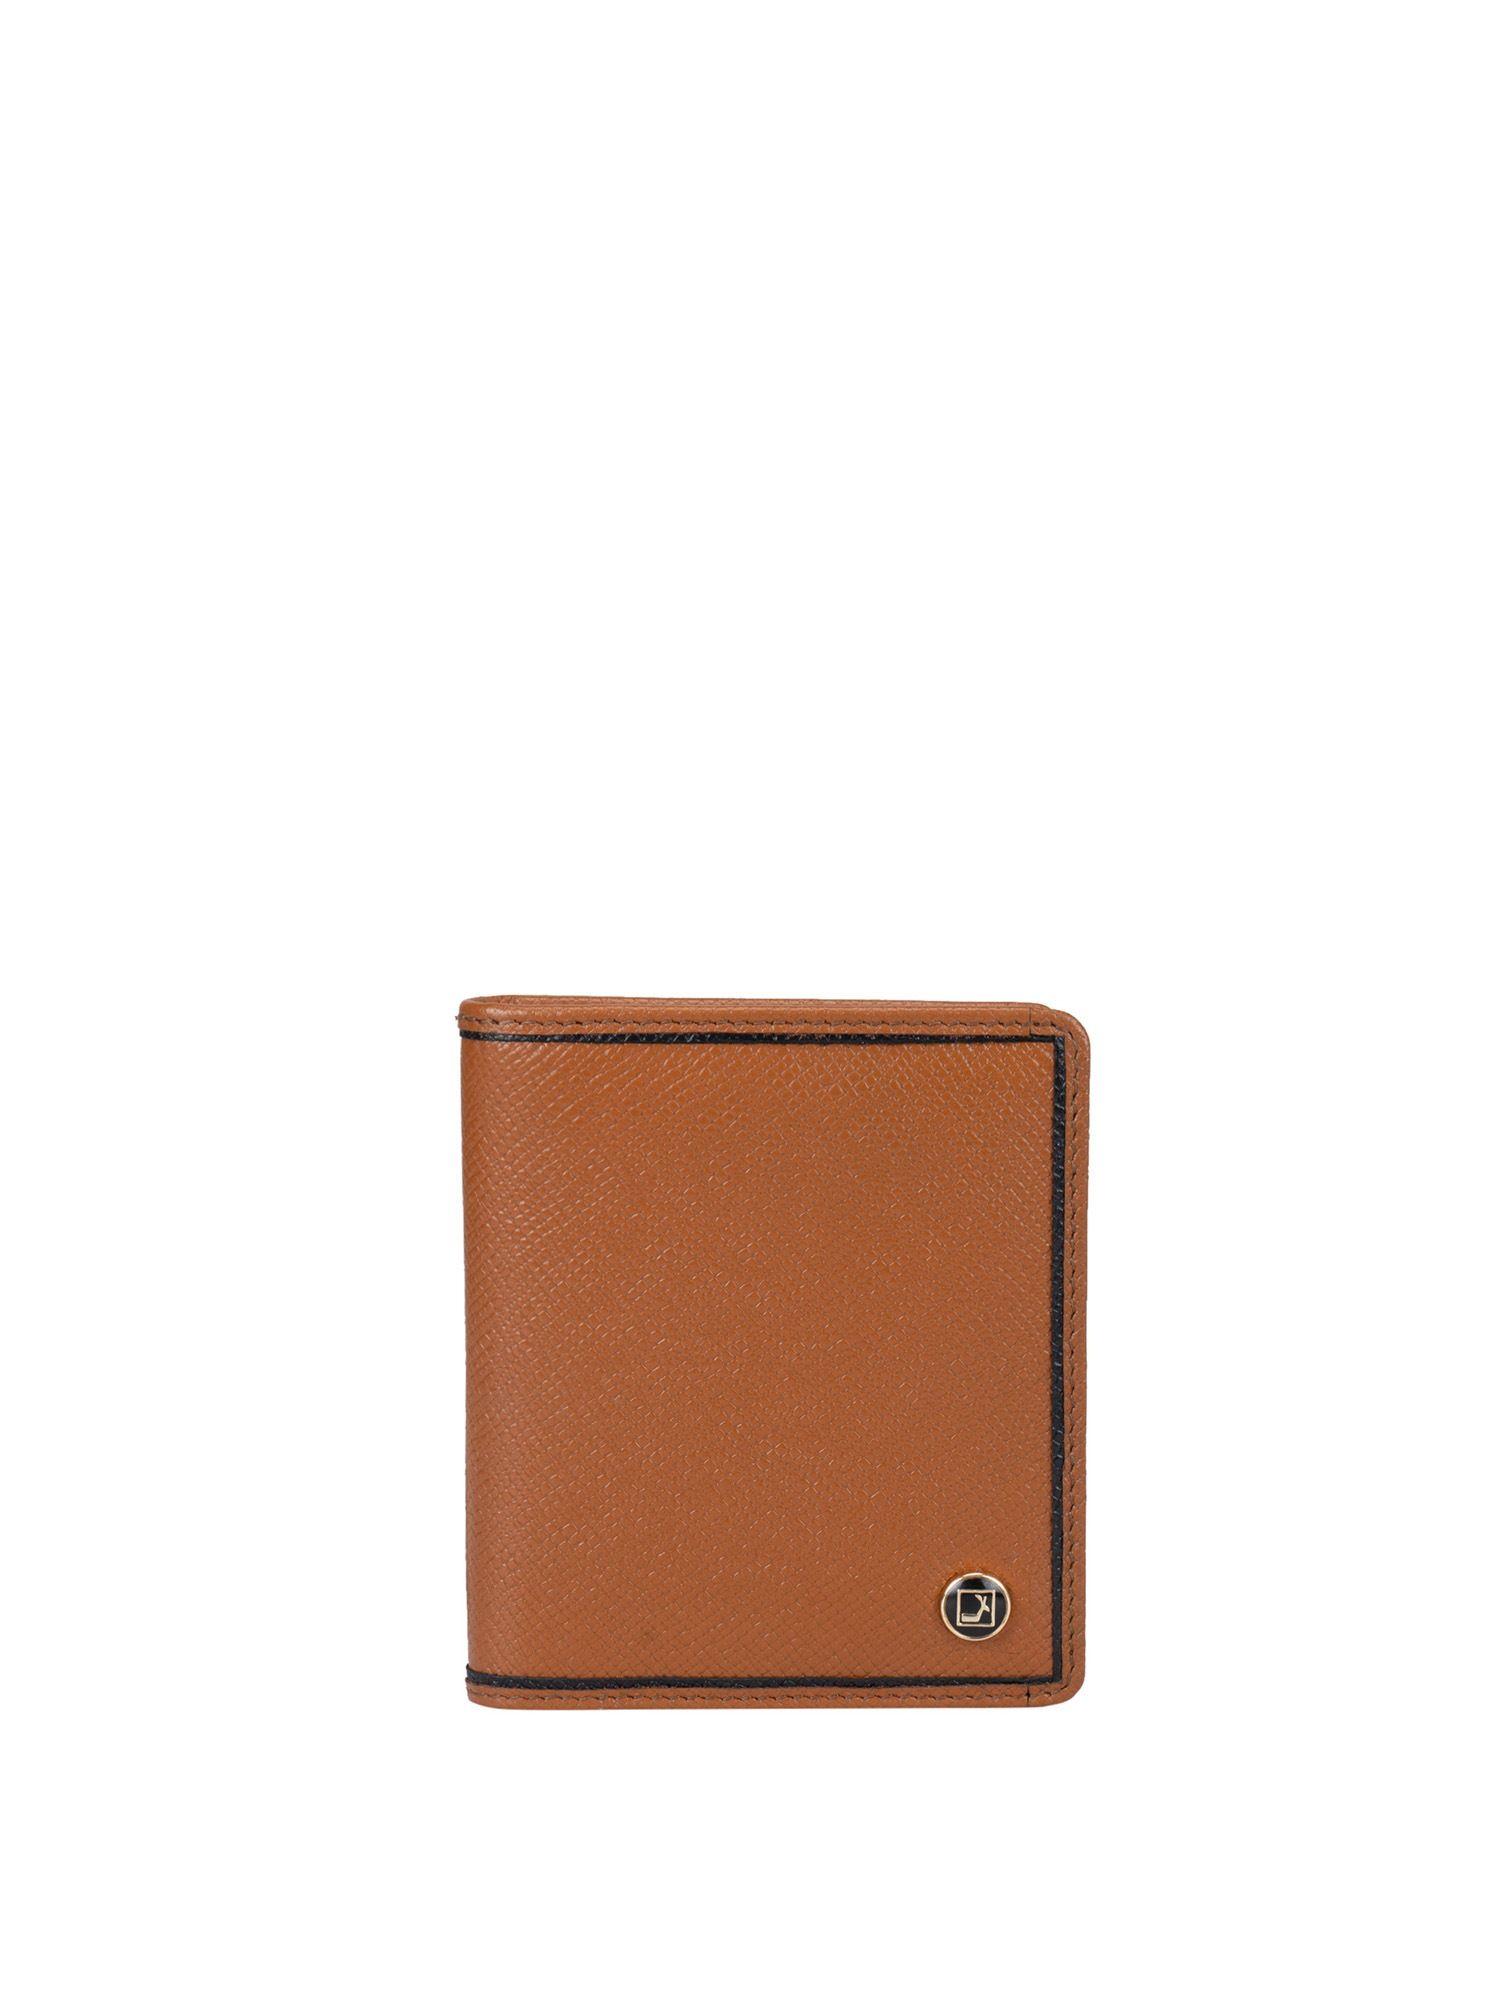 genuine leather cognac card case